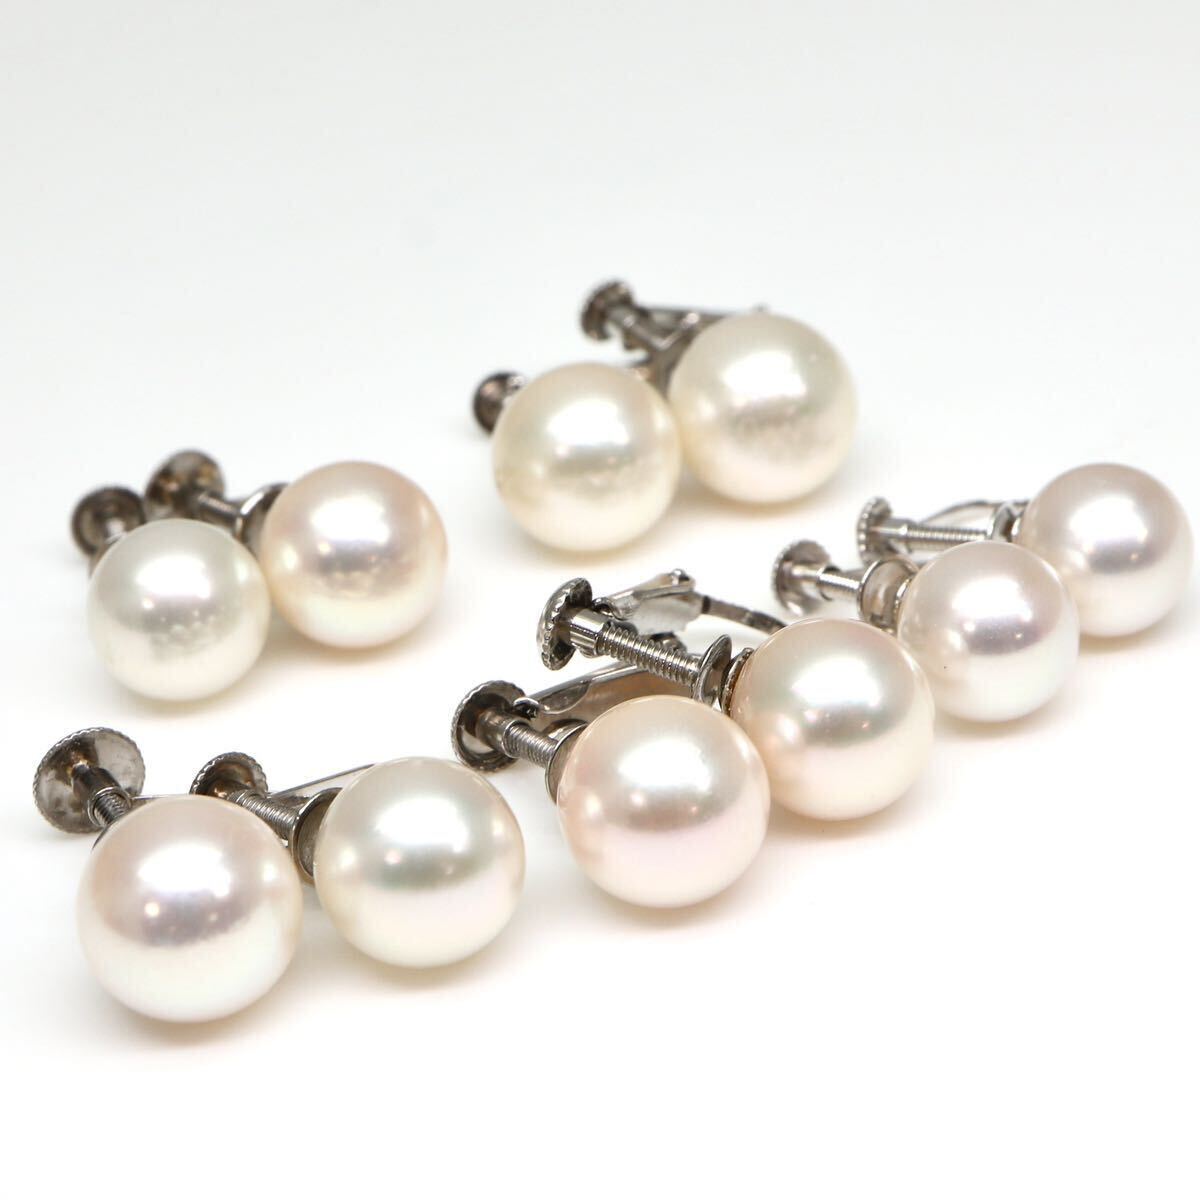 ◆K14/Pt900 アコヤ本真珠 イヤリング5点おまとめ◆Am 15.1g 7.5-9.0mm珠 パール pearl ジュエリー earring pierce jewelry EC2の画像1